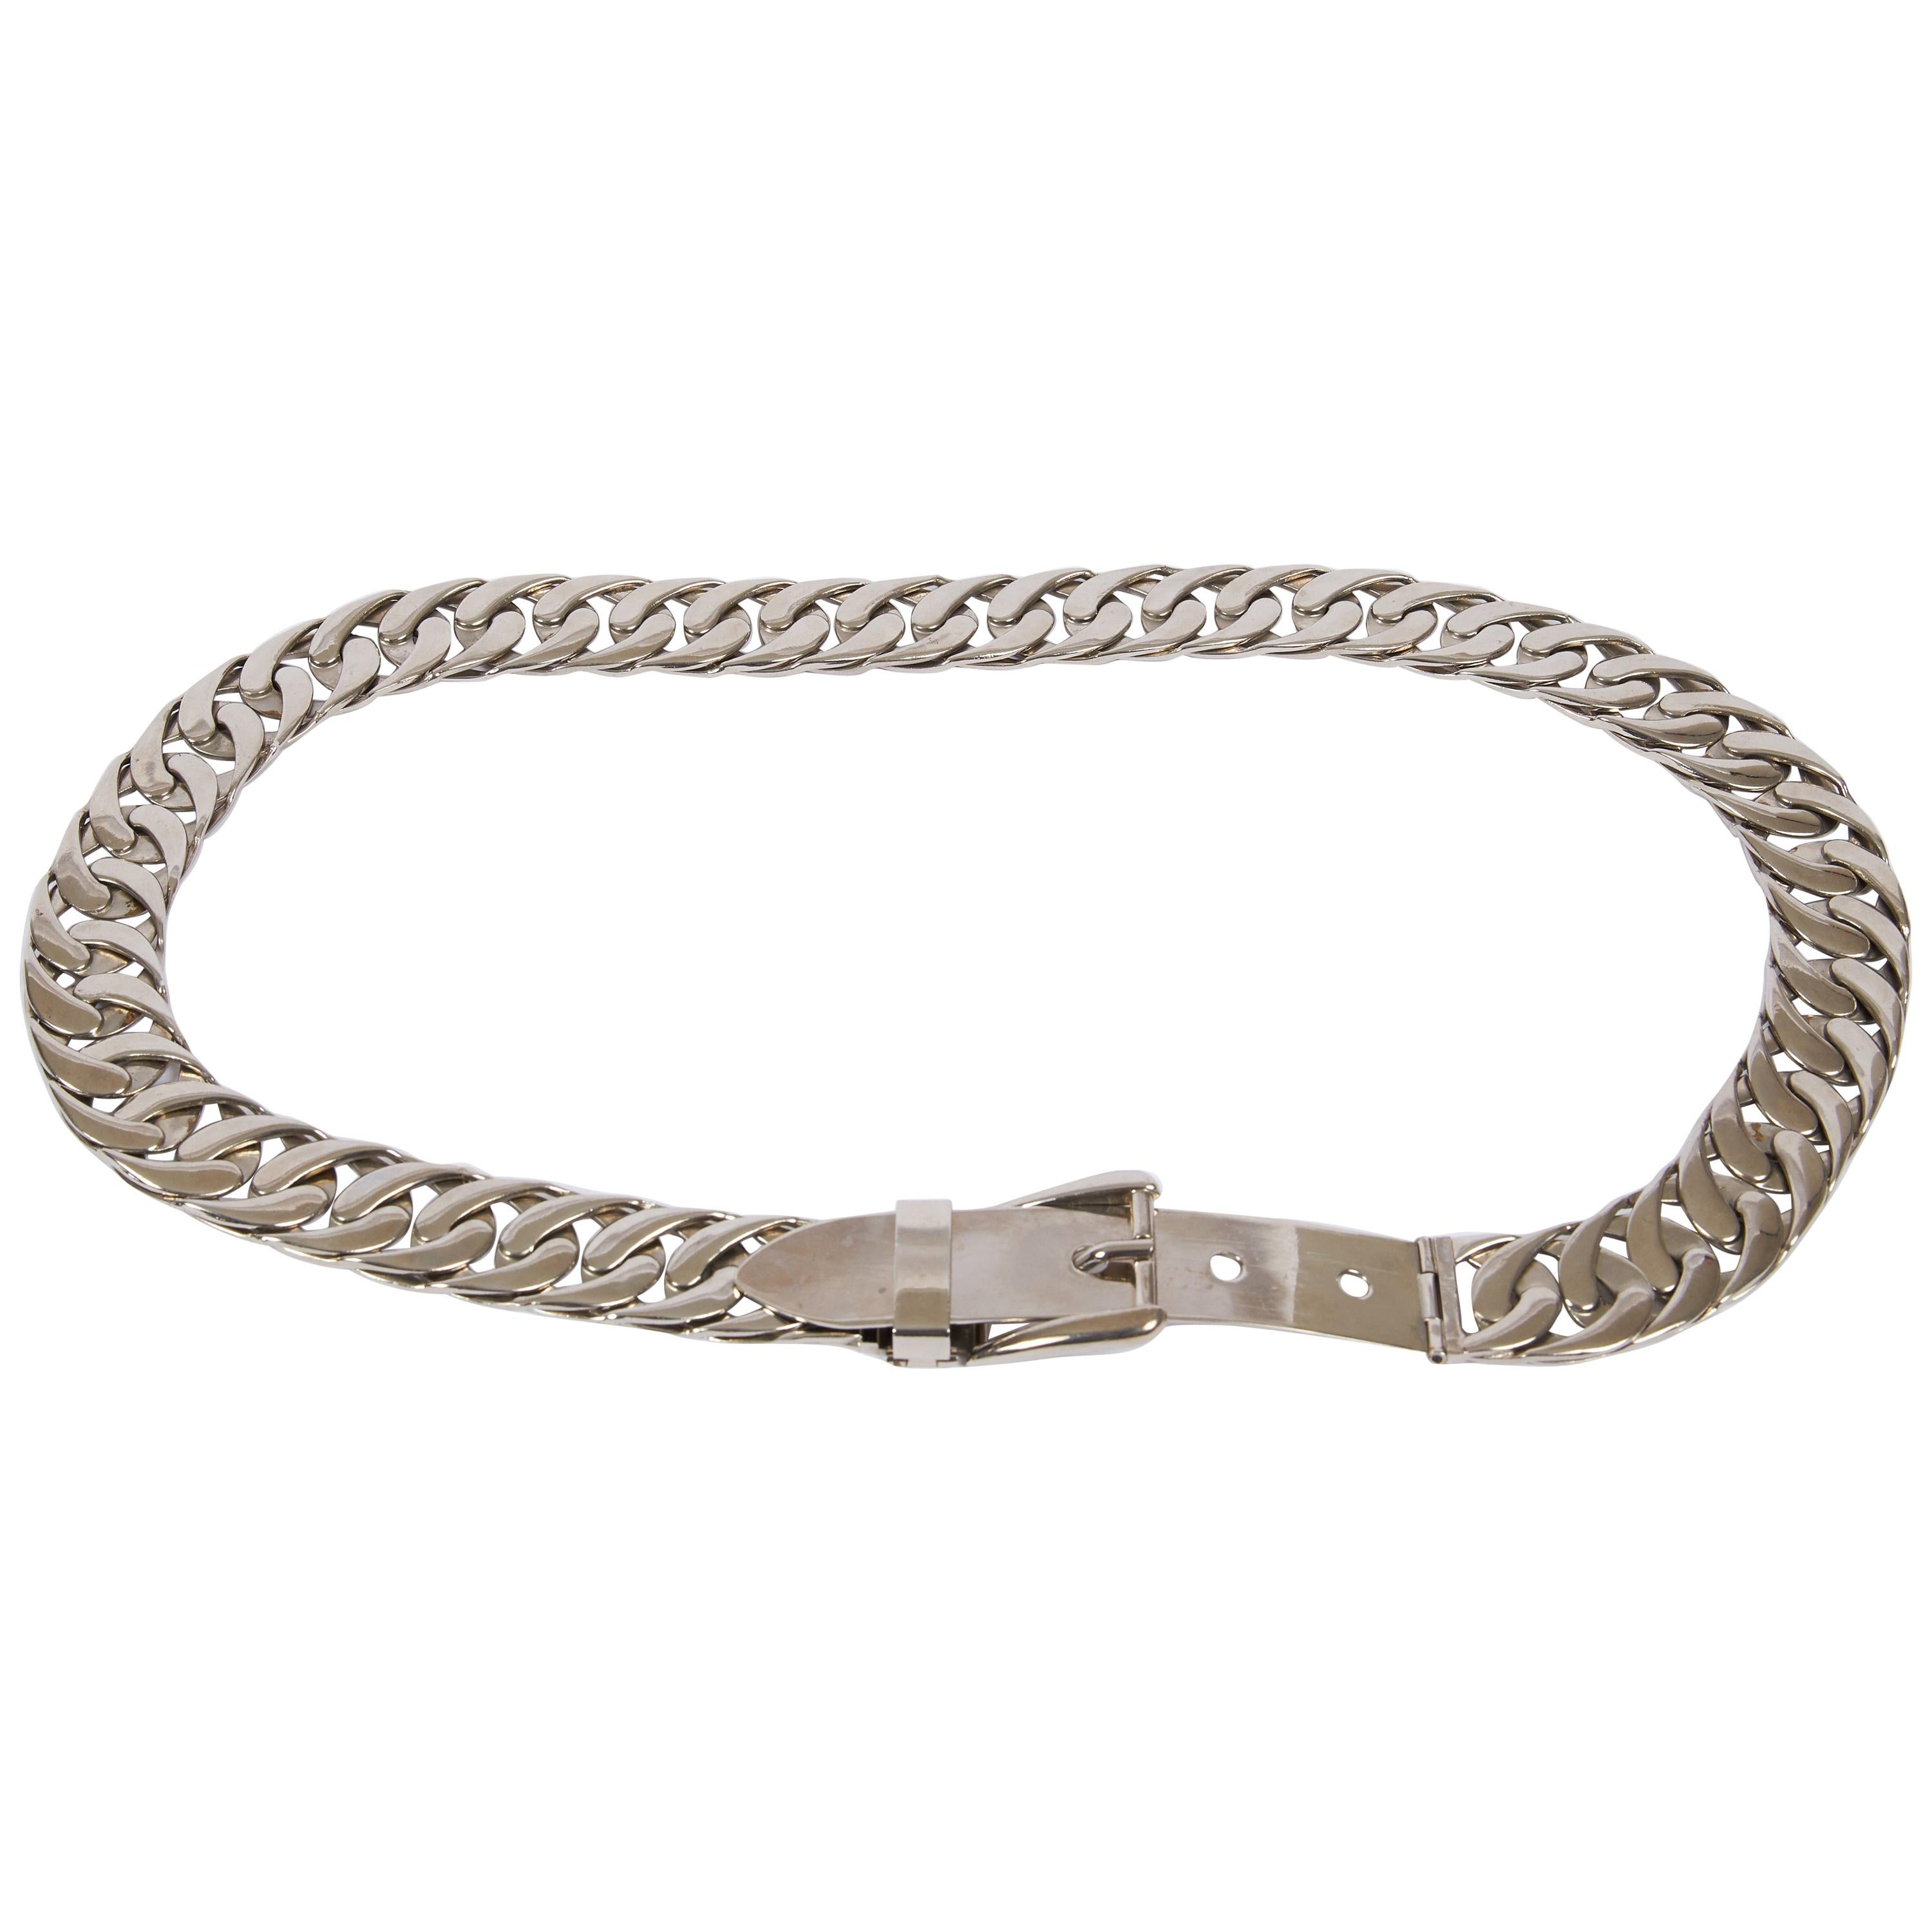 Black Silver Chrome Chain Snakeskin Rock Belt 86-96 cm ZX38 34-38 inch waist 